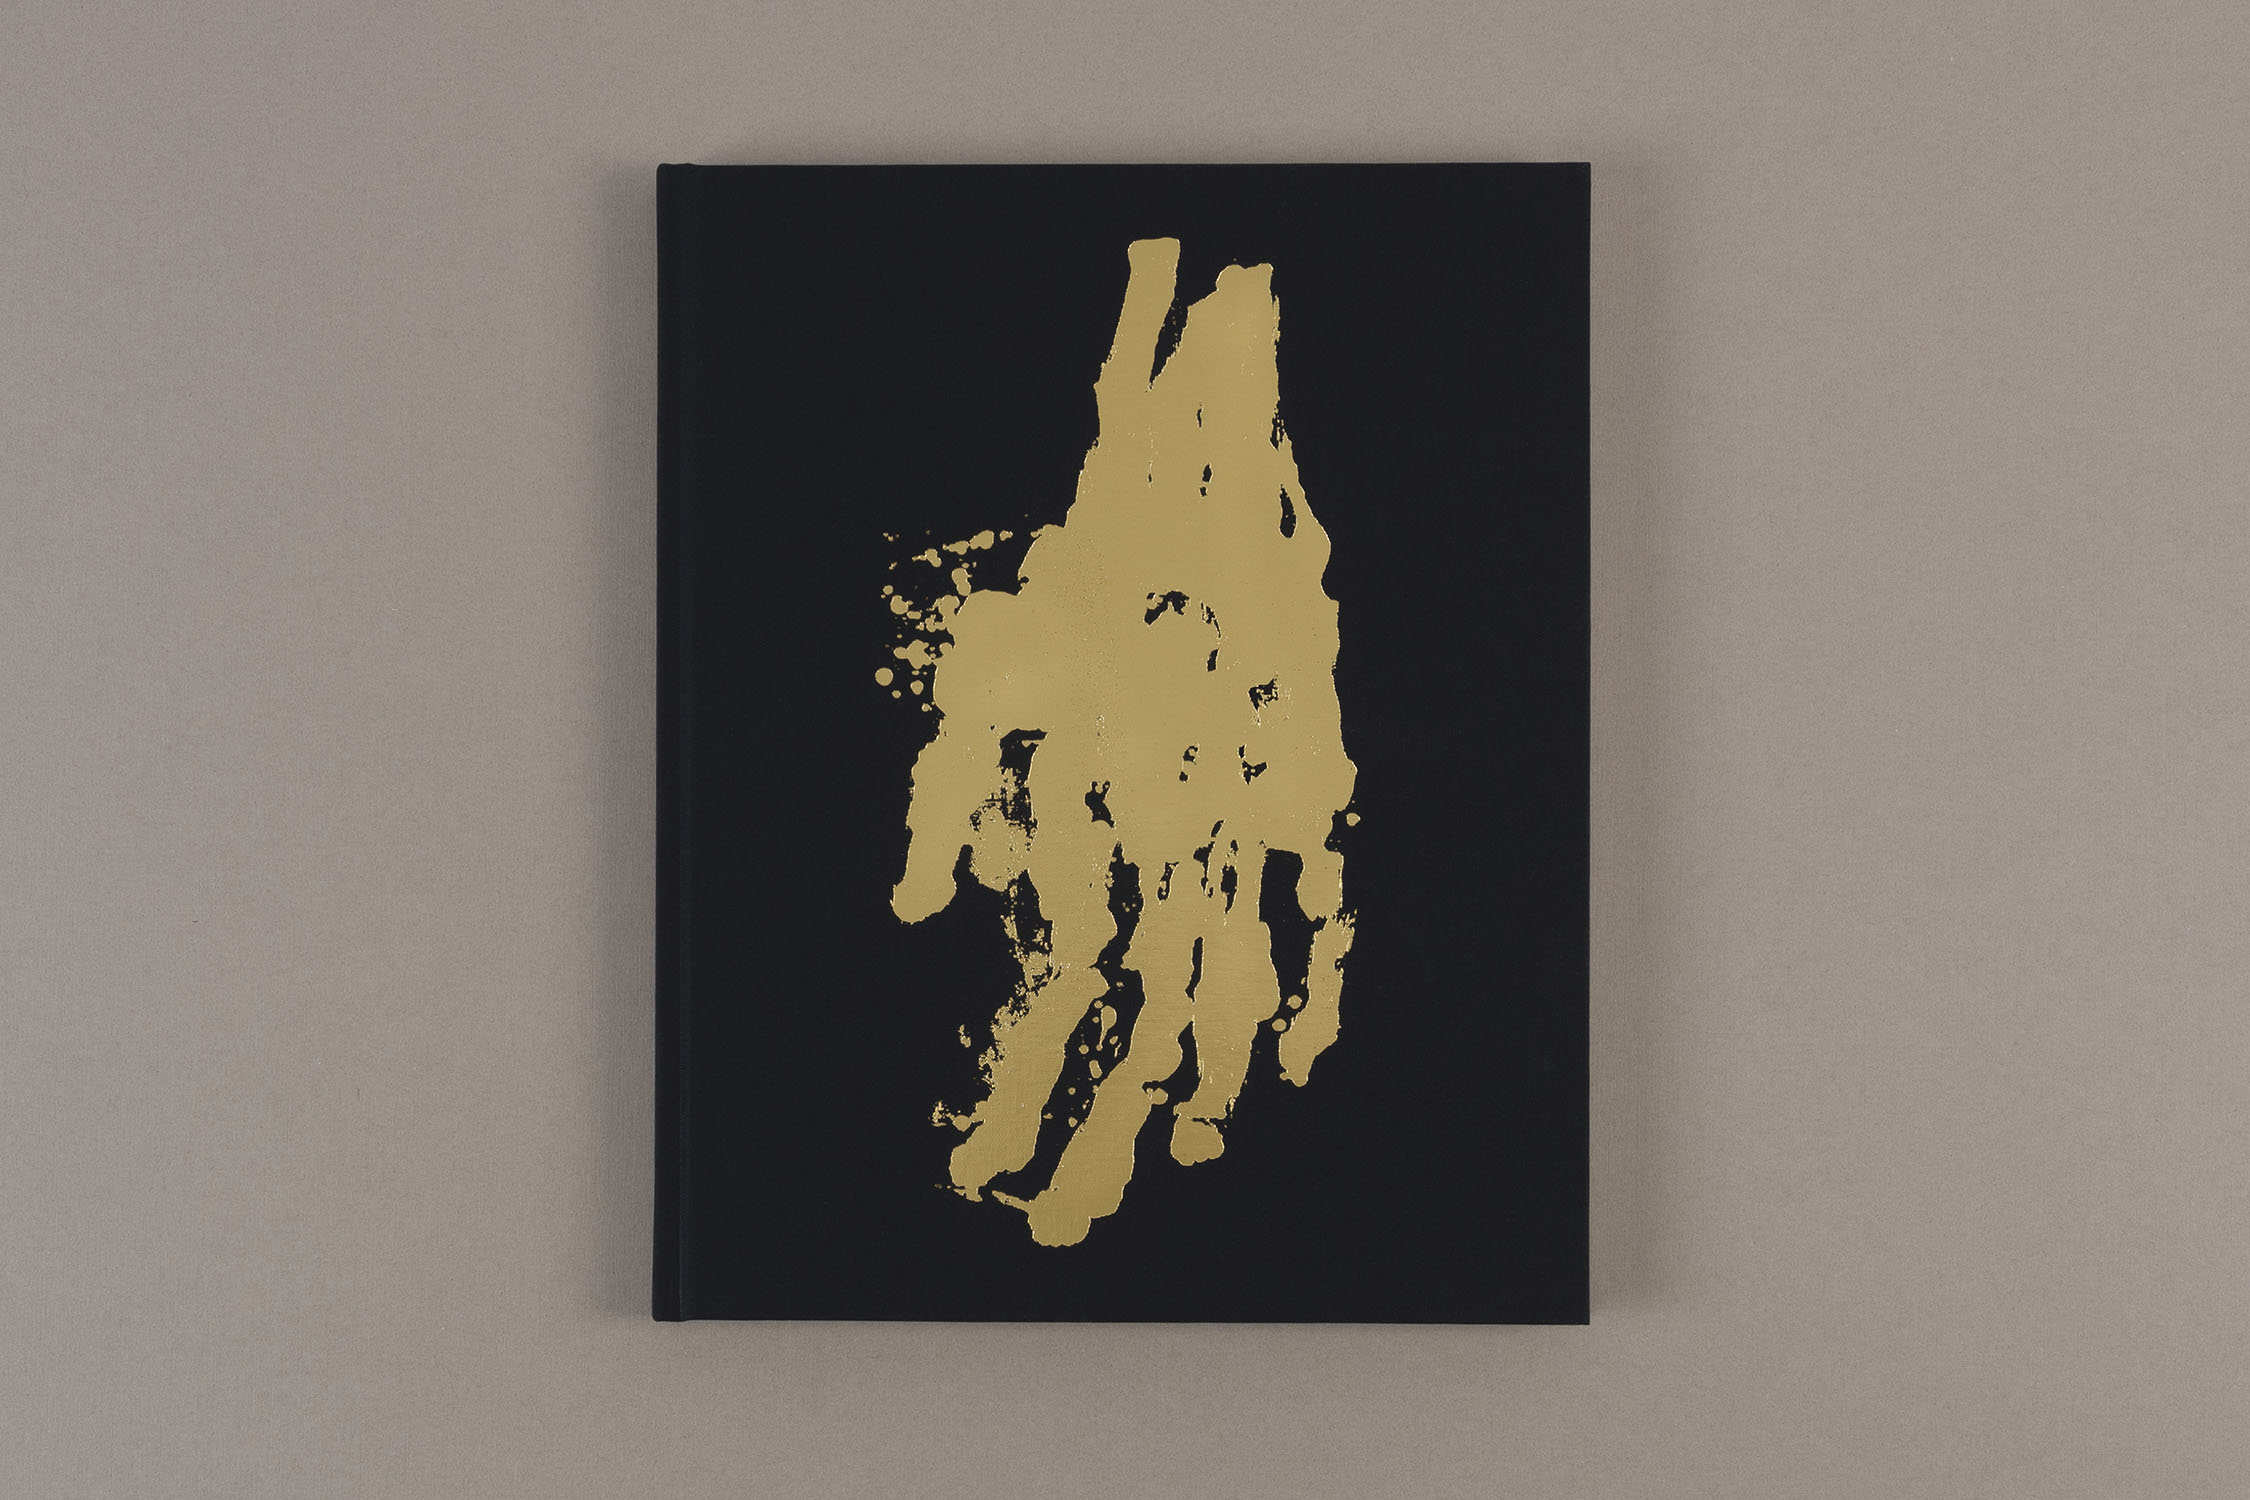 Georg Baselitz ‘Darkness Goldness’ (2020)